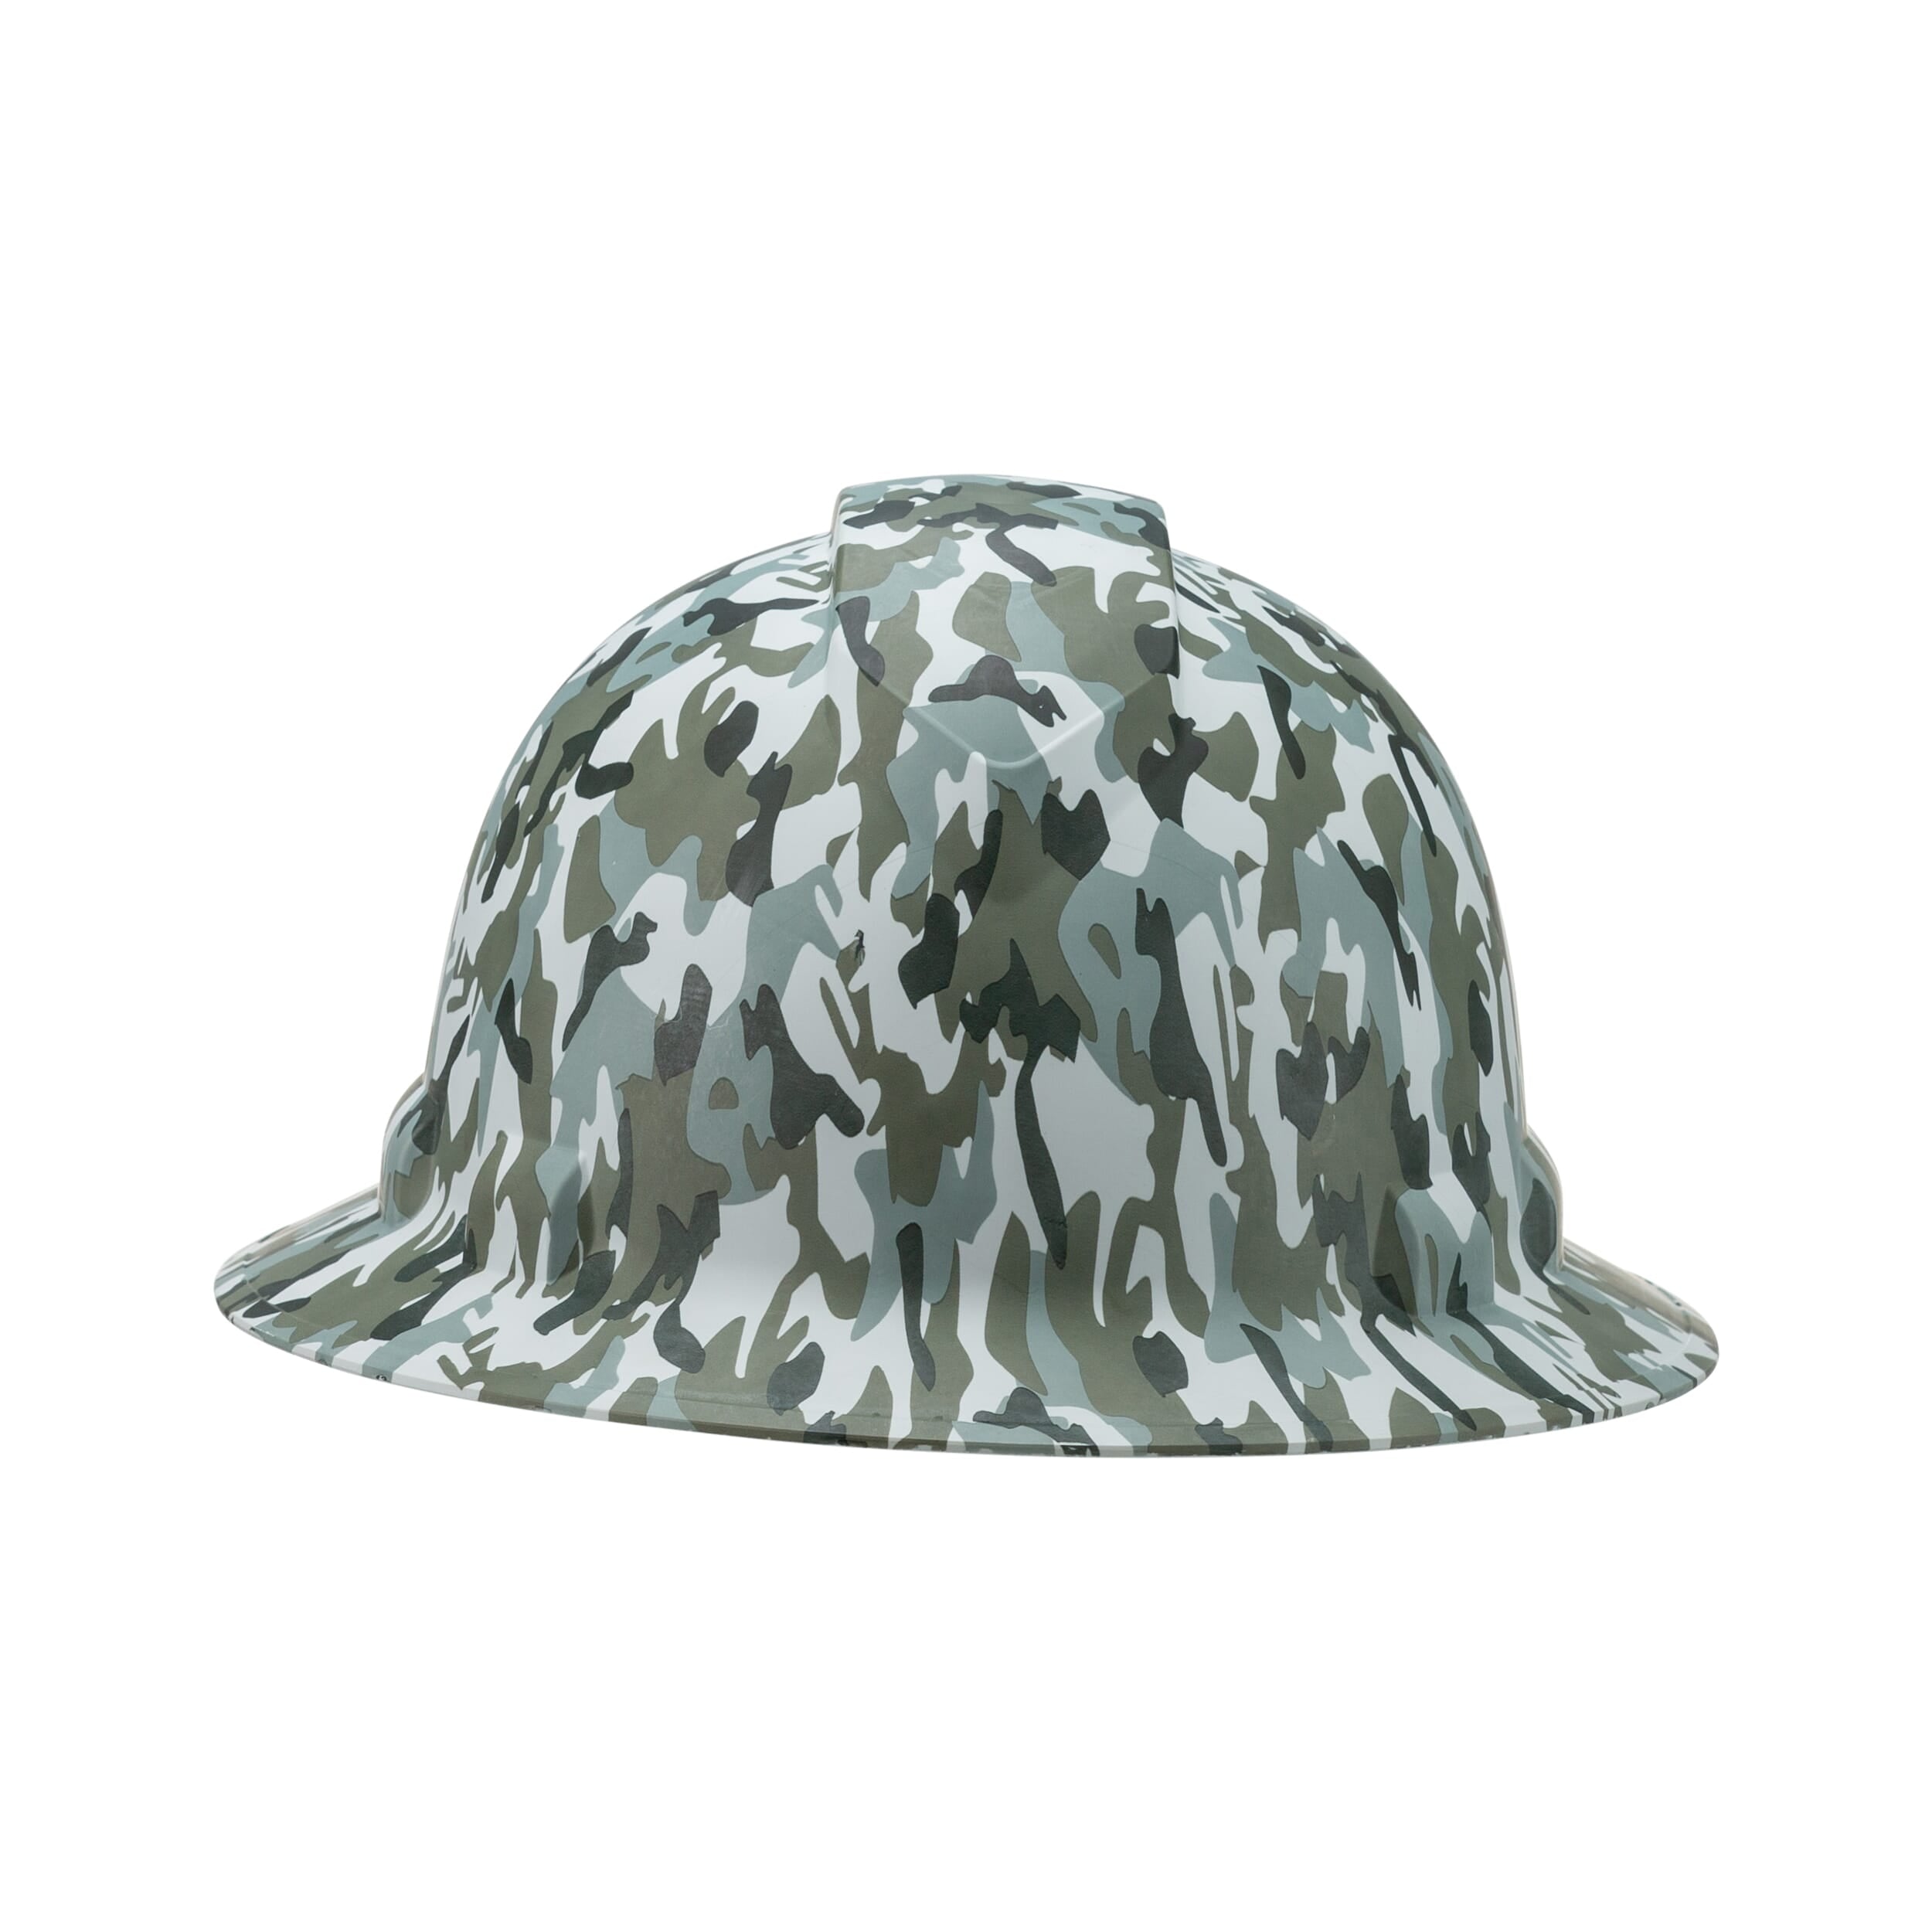 Full Brim Pyramex Hard Hat, Custom Rocky Camo Design, Safety Helmet, 6 Point